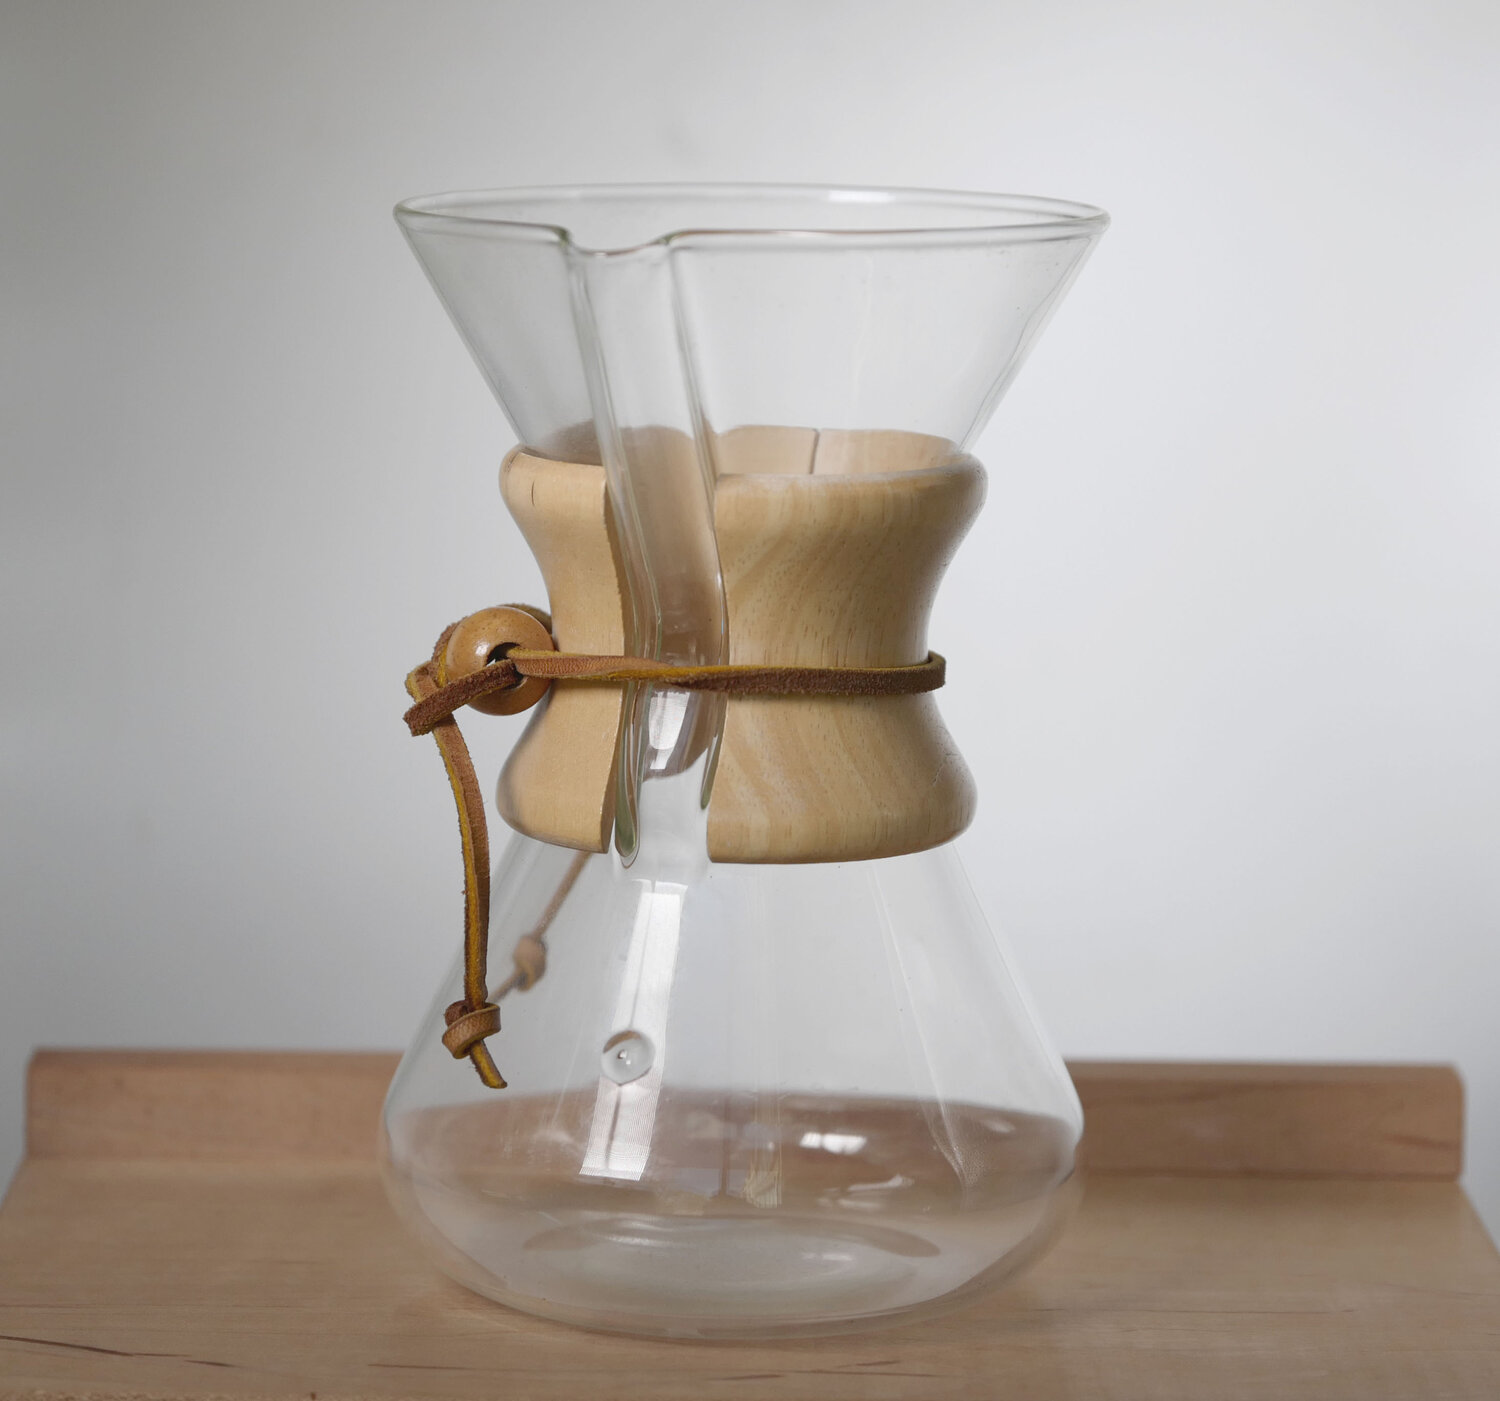 Chemex 6 Cup Glass Coffee Maker